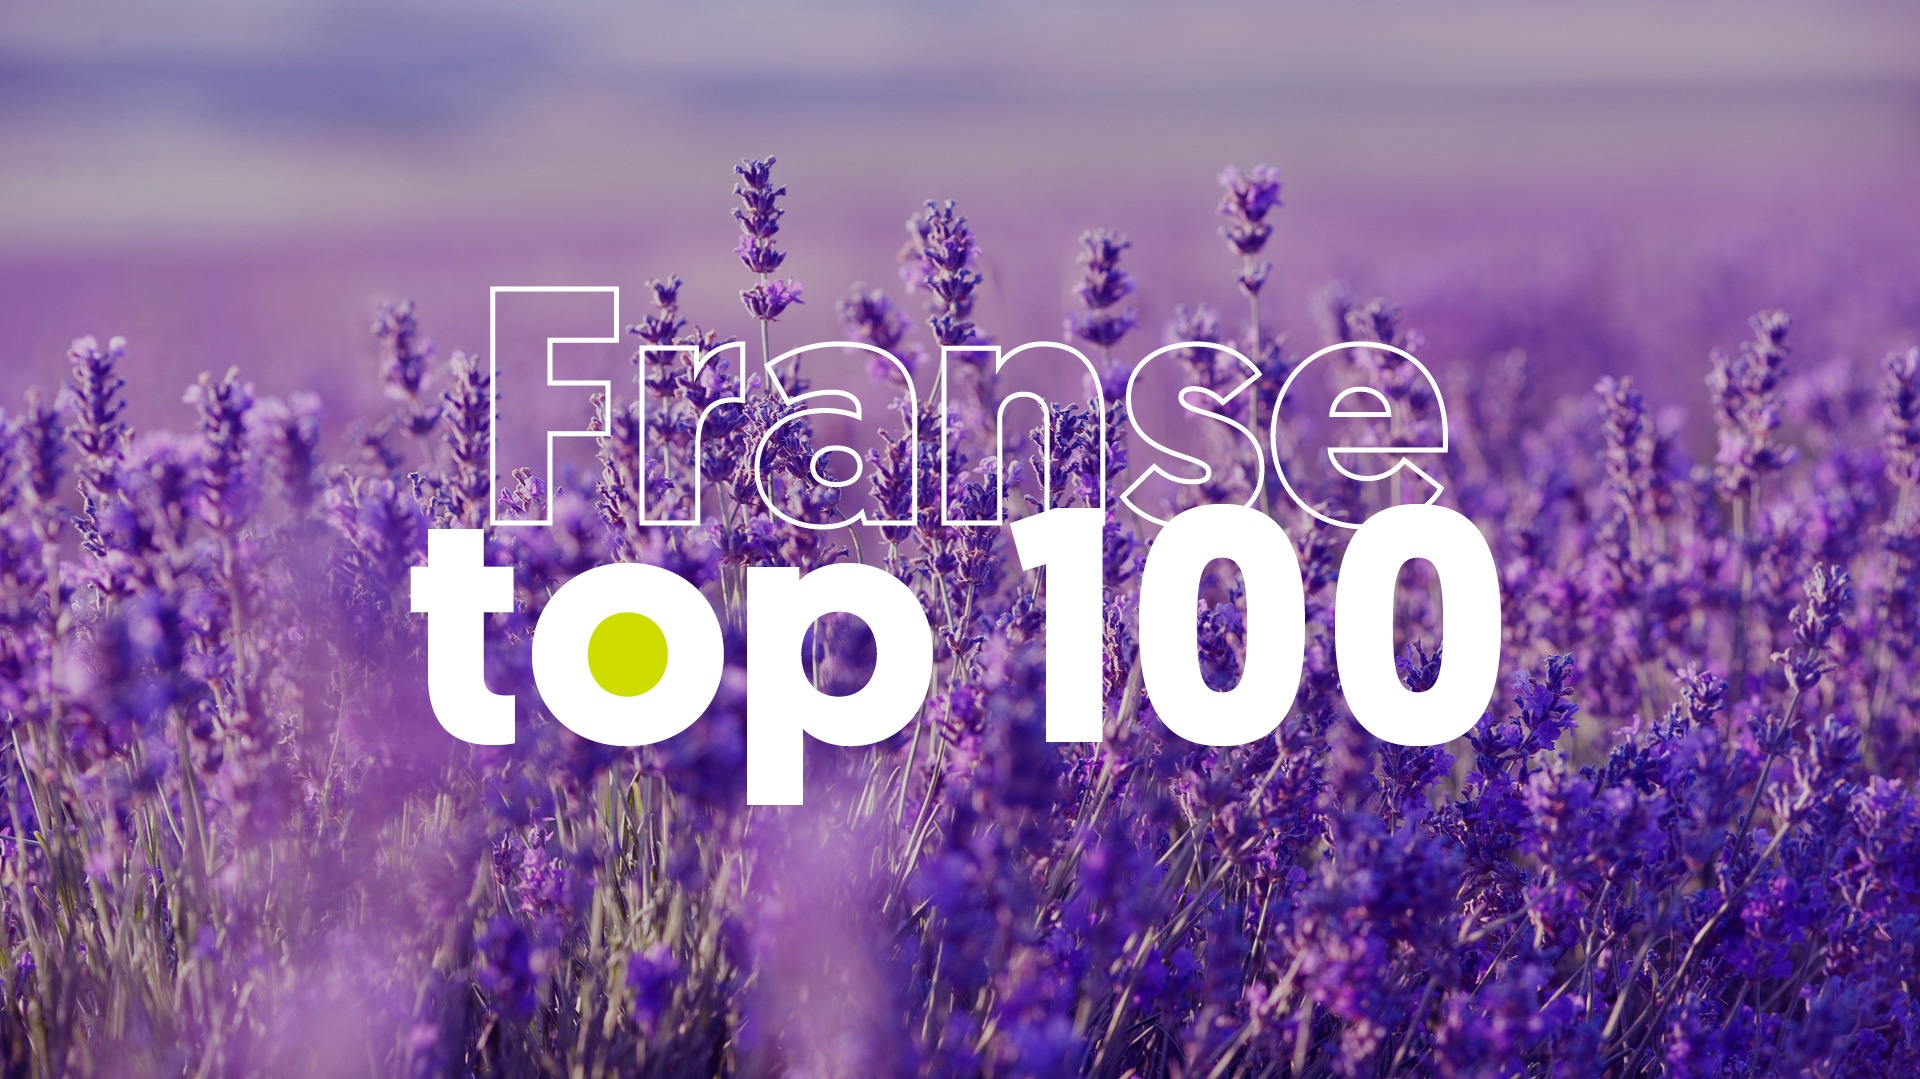 Hitlijst website franse top 100  zonder ring 